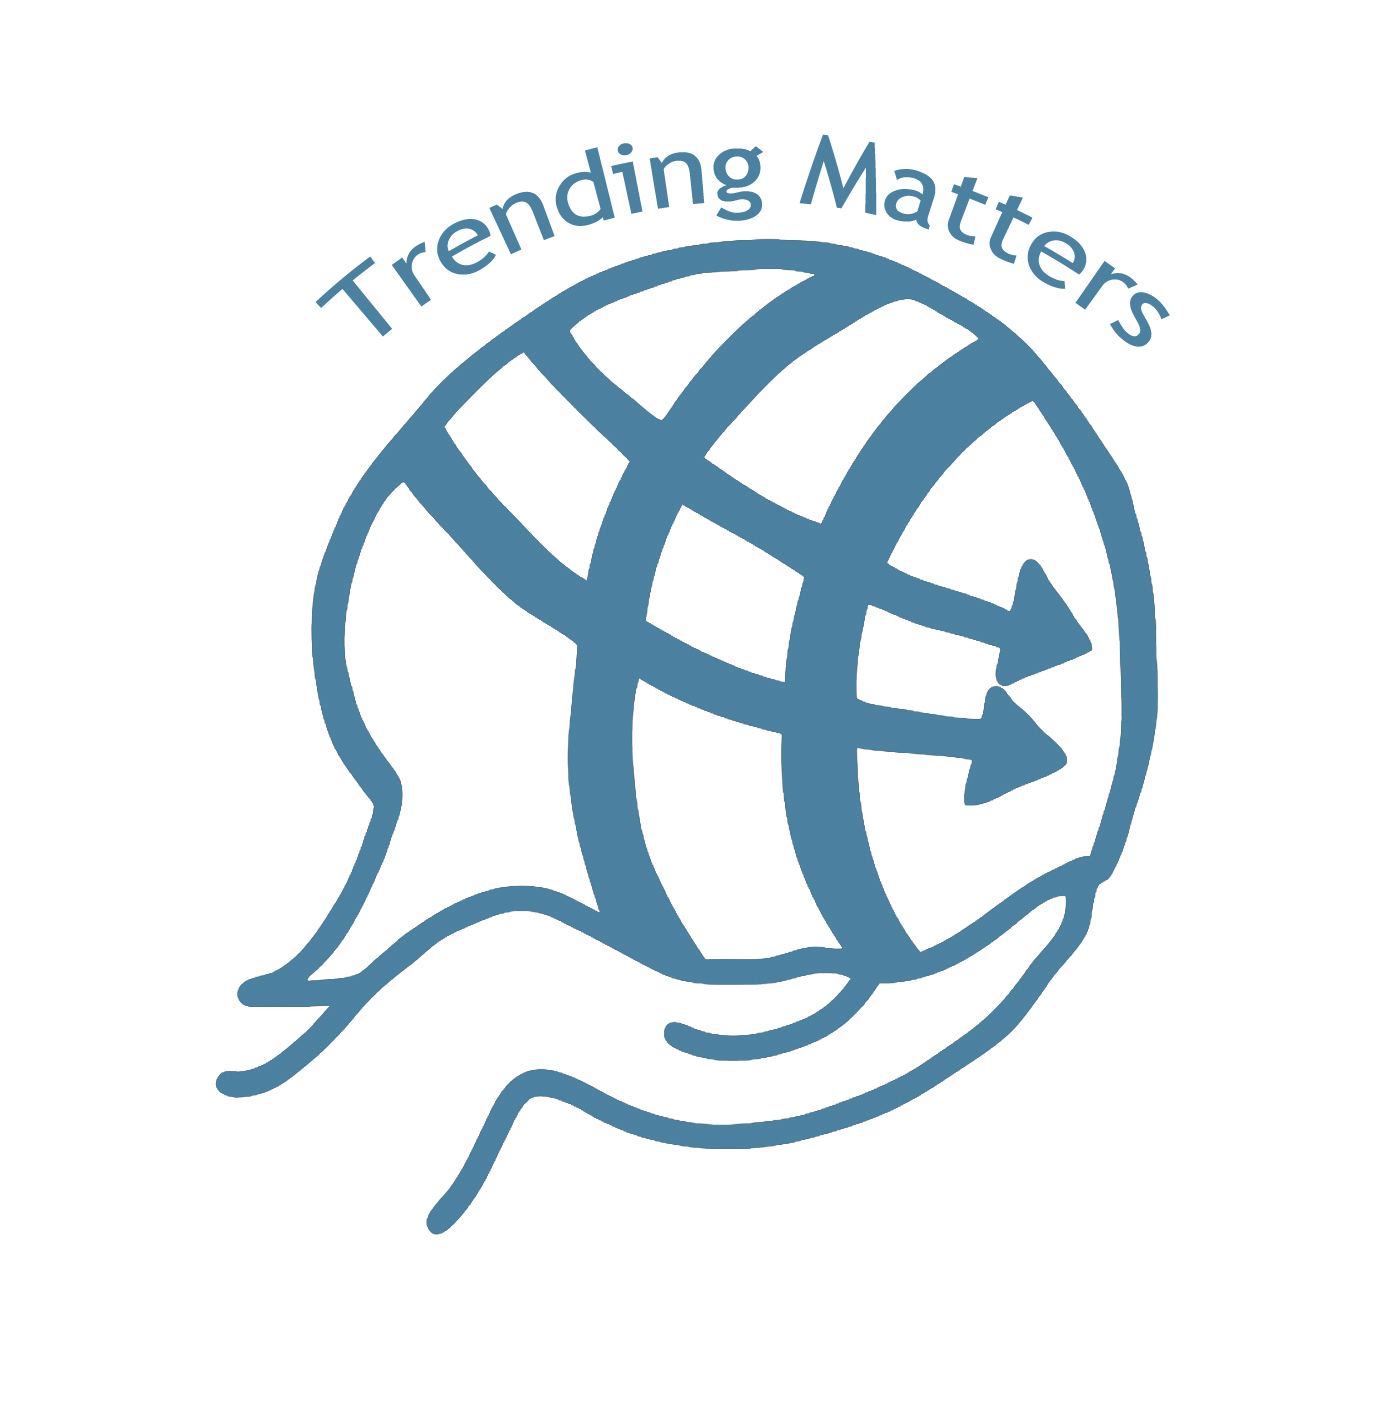 Trending Matters: Social Media Gets Social